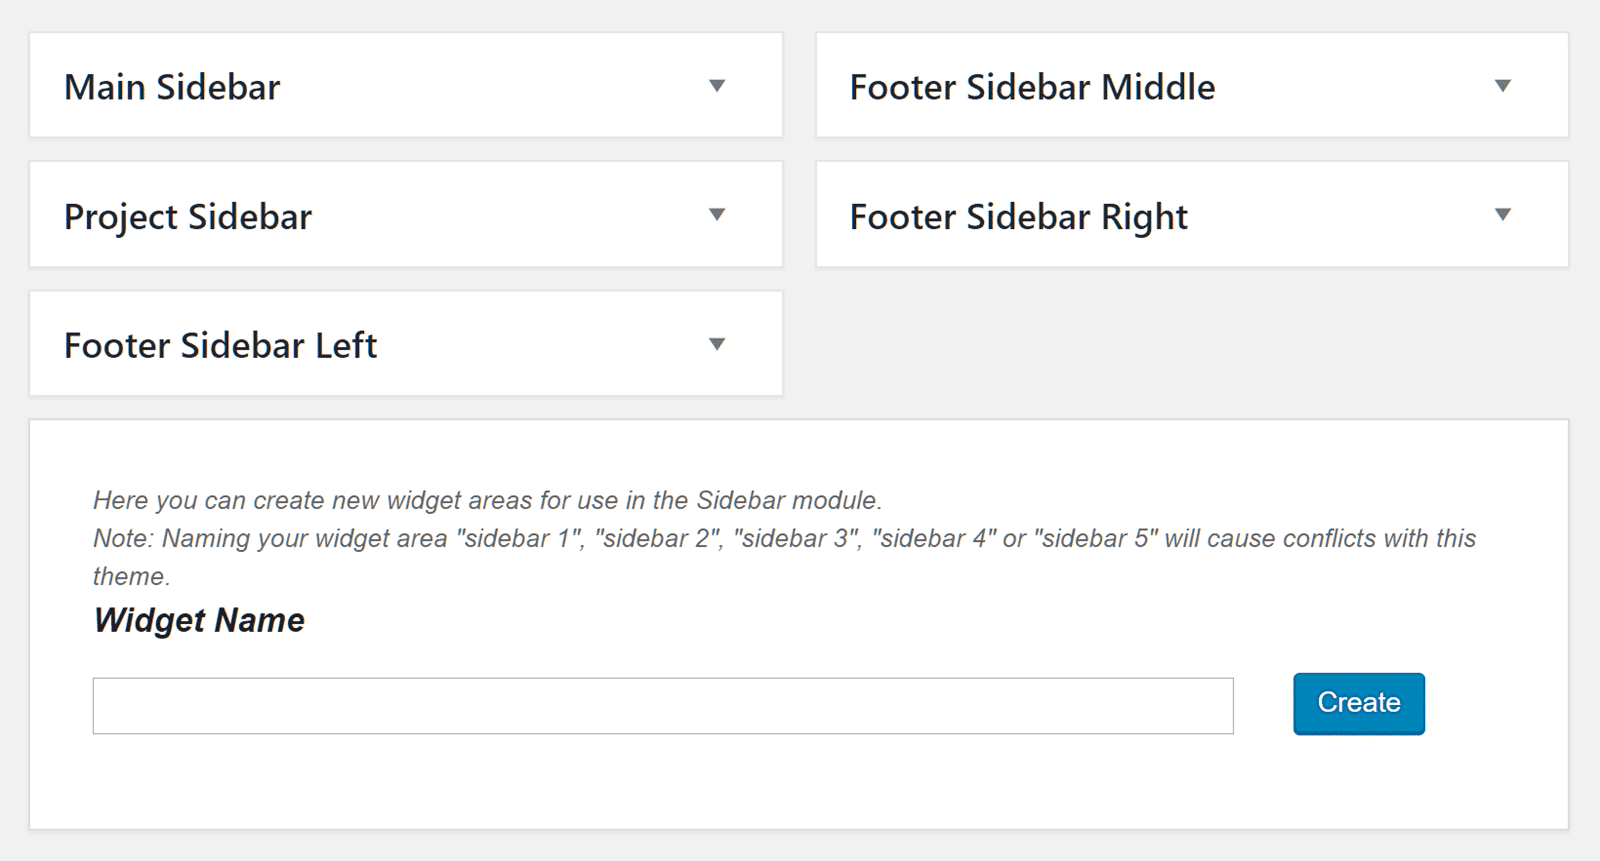 Extra Sidebars Options